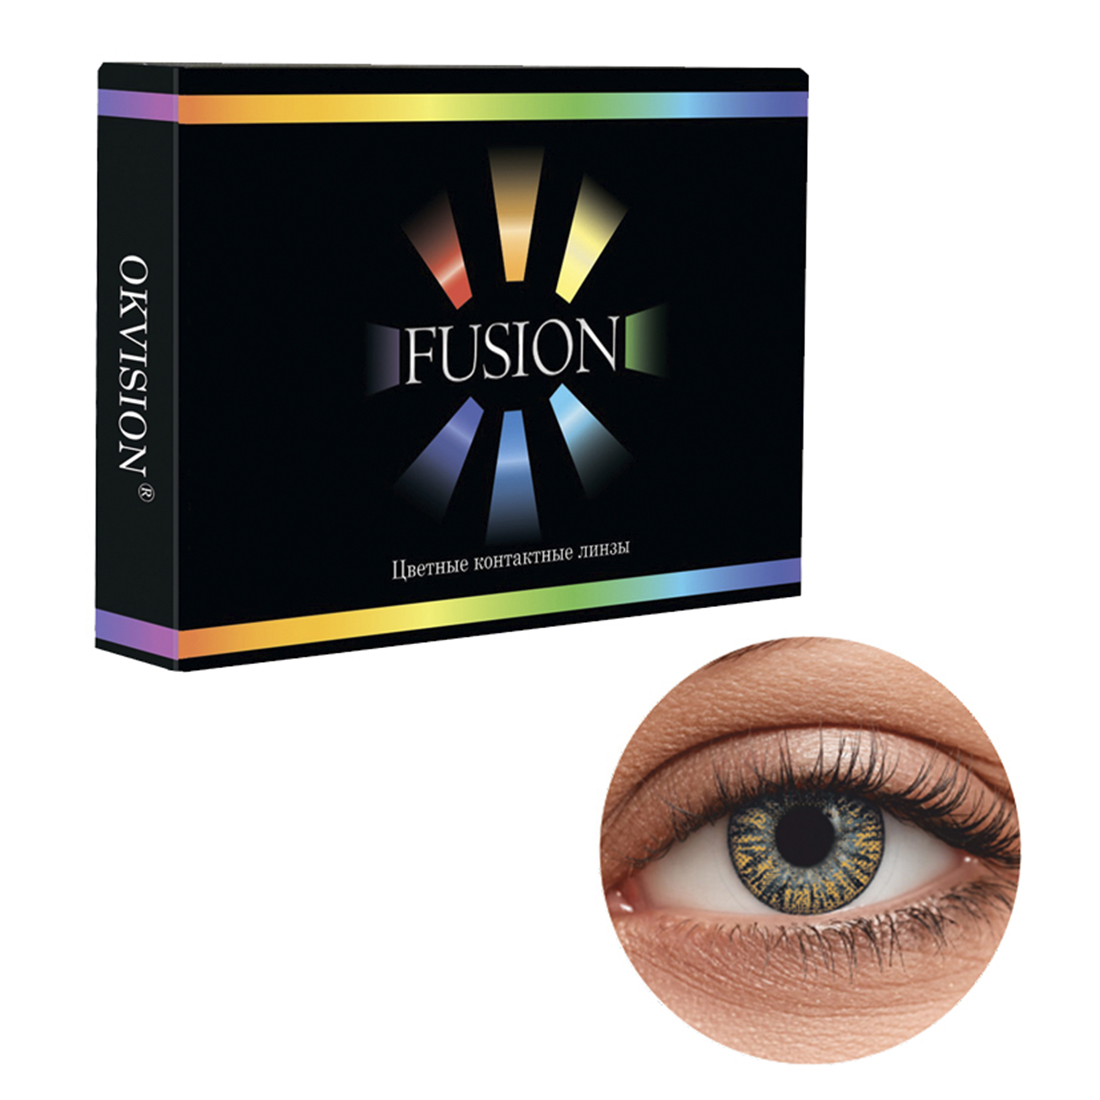 Цветные контактные линзы OKVision Fusion monthly R 8.6 -4.00 цвет Coffee 2 шт 1 месяц - фото 1